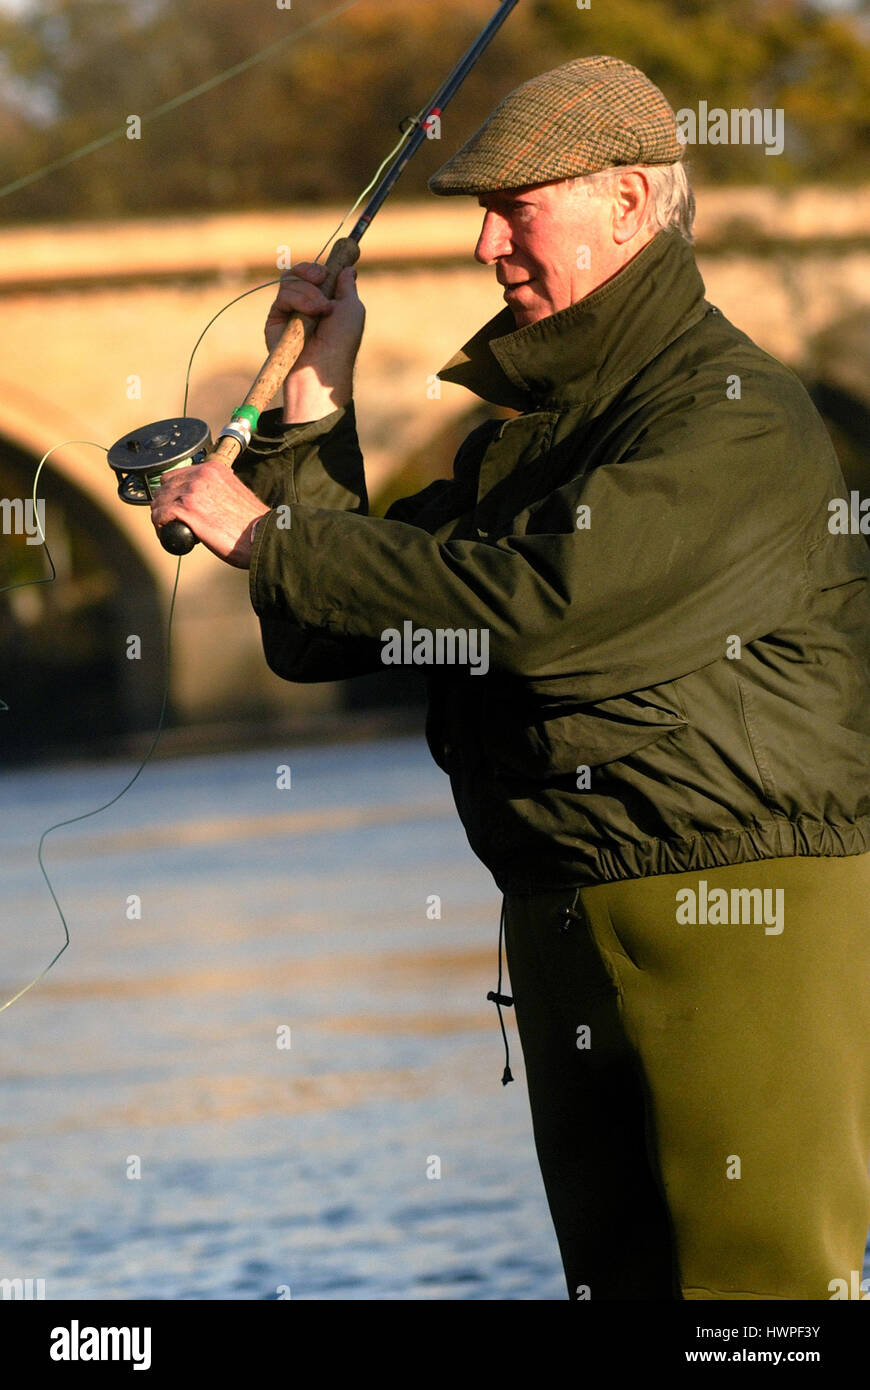 Jack Charlton pêche dans la Tweed à Cornhill-on-Tweed Banque D'Images